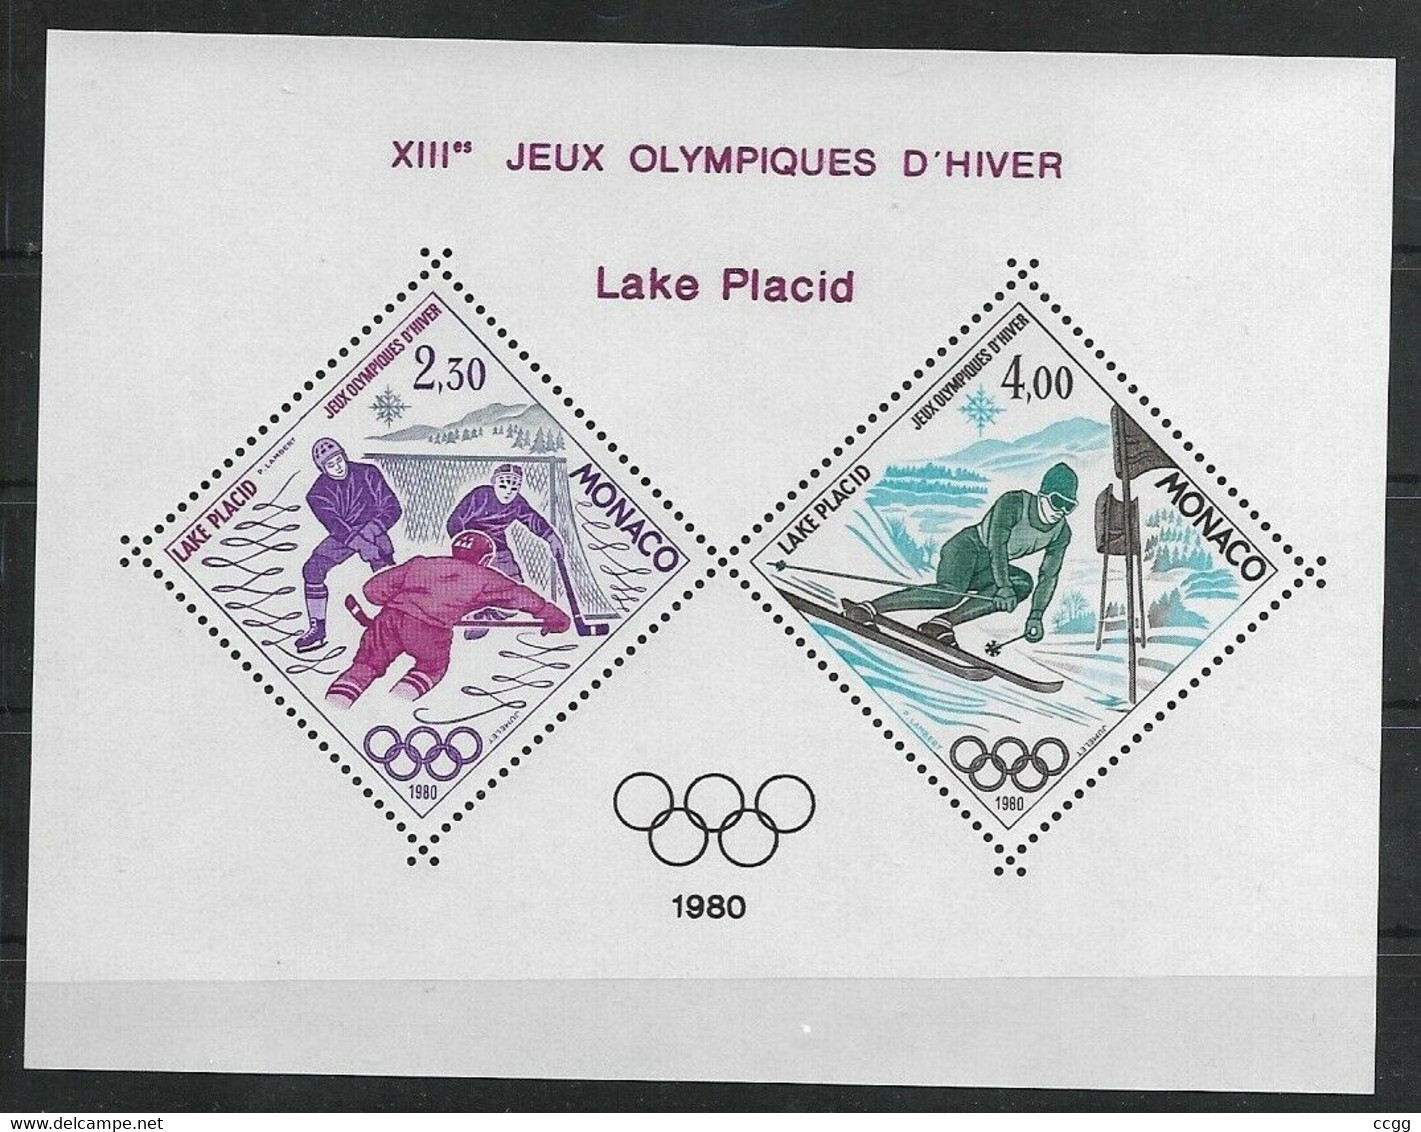 Olympische Spelen  1980 , Monaco - Blok  Postfris - Hiver 1980: Lake Placid